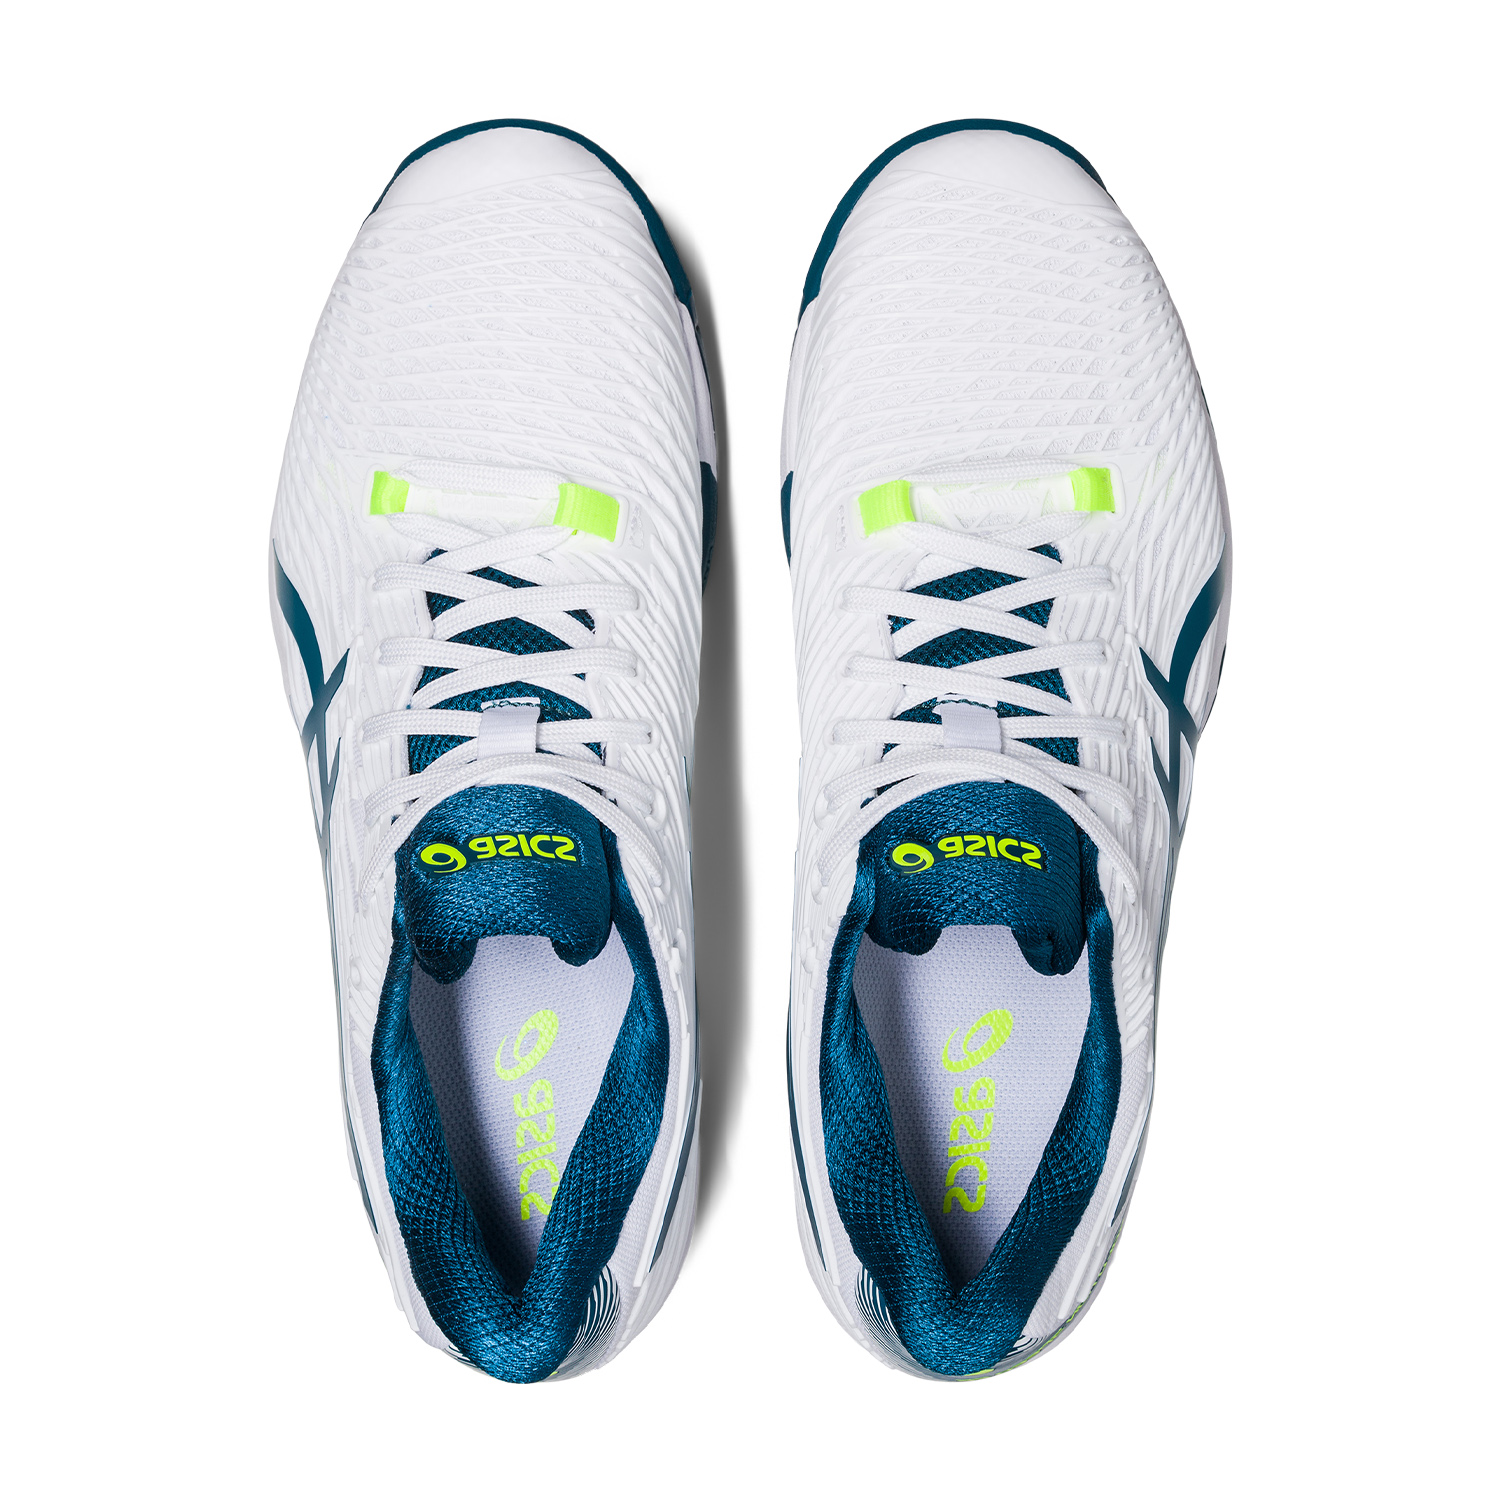 Asics Solution Speed FF 2 Men's Tennis Shoes - White